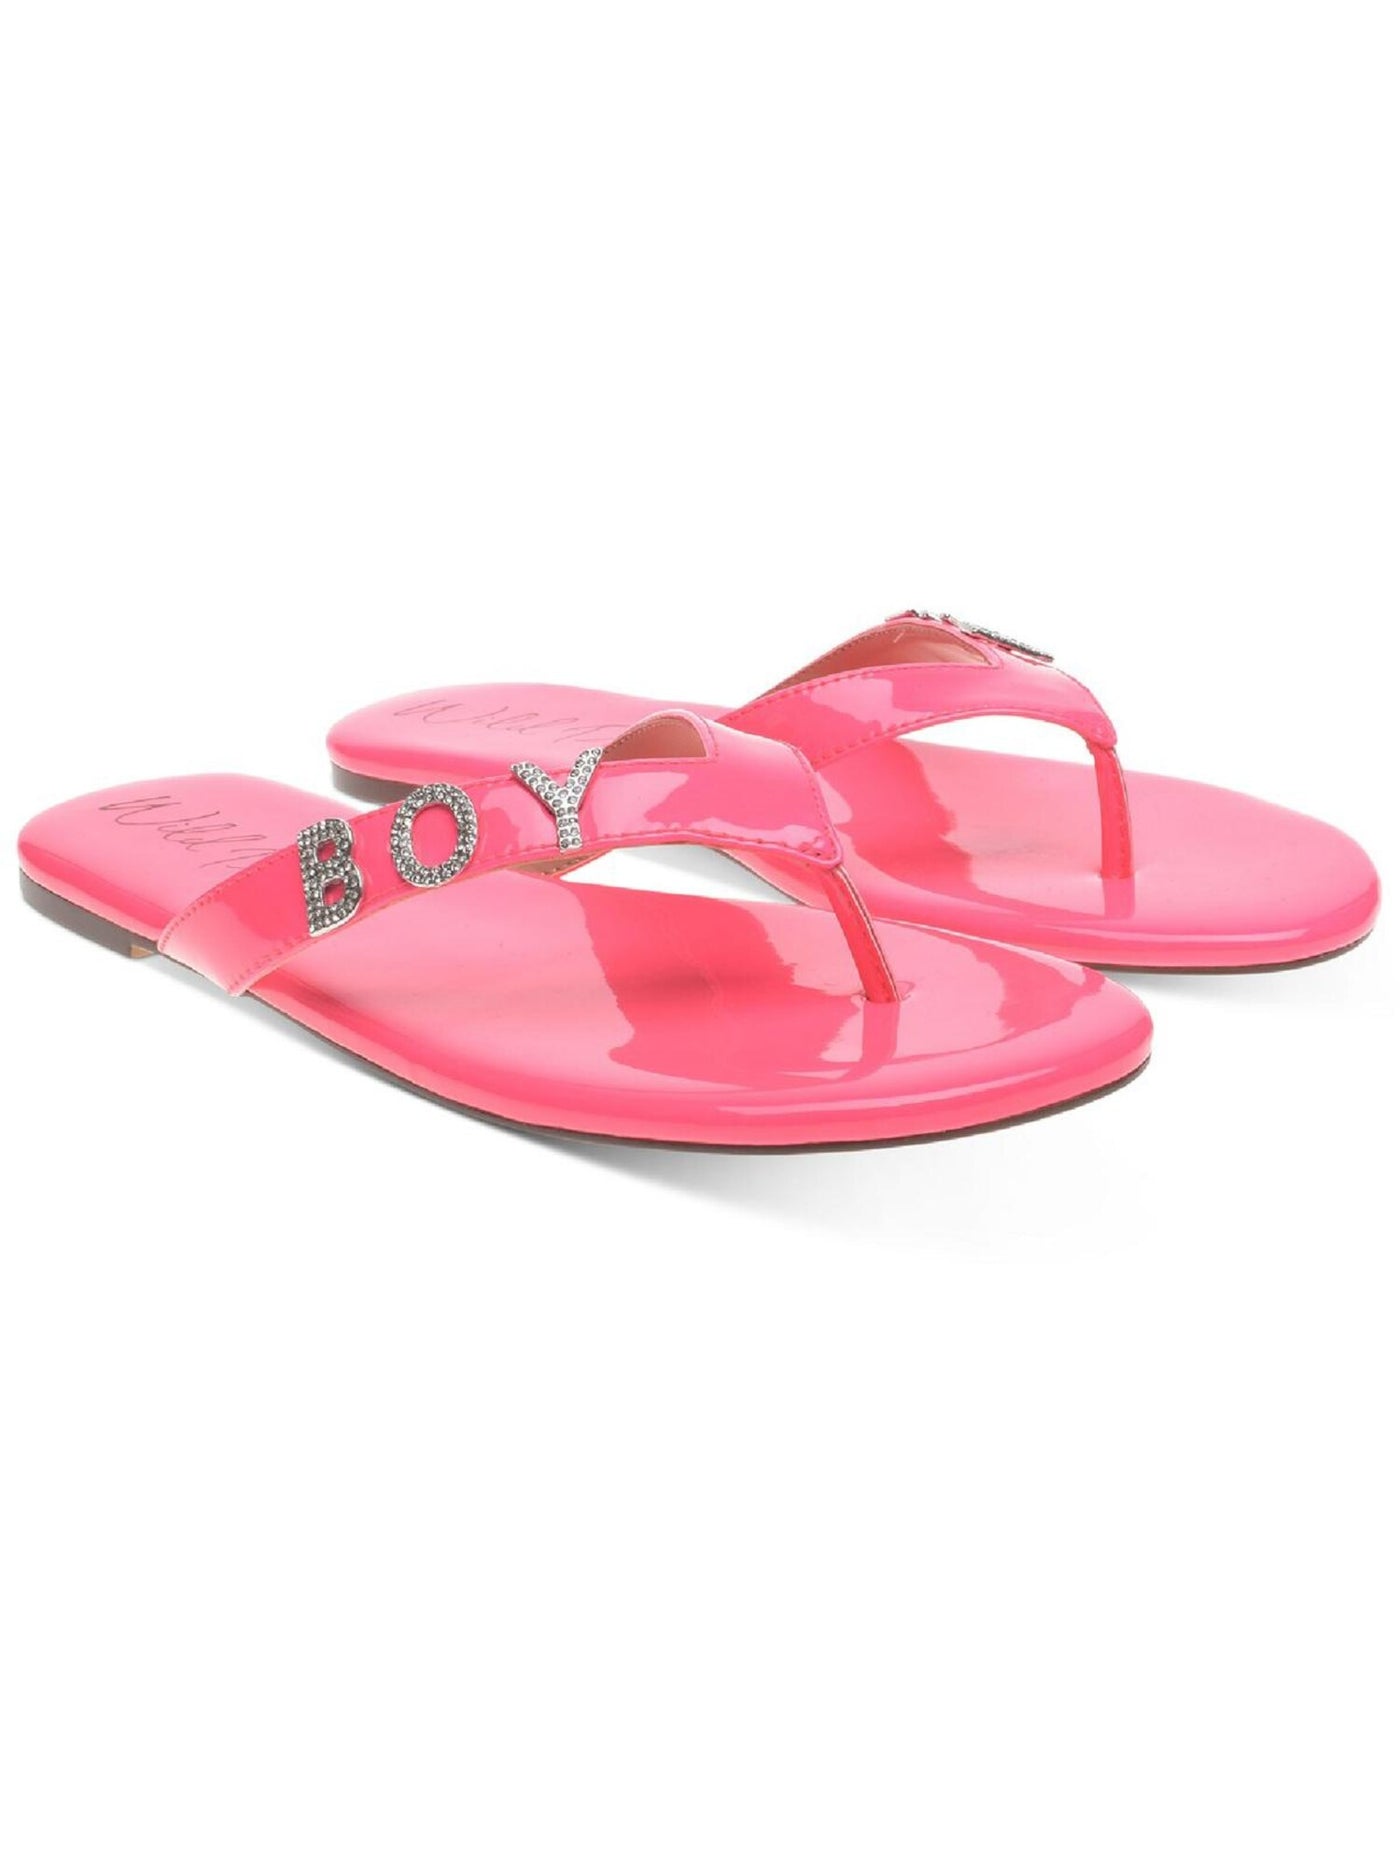 WILD PAIR Womens Pink Rhinestone Fantasia Round Toe Slip On Thong Sandals Shoes 7